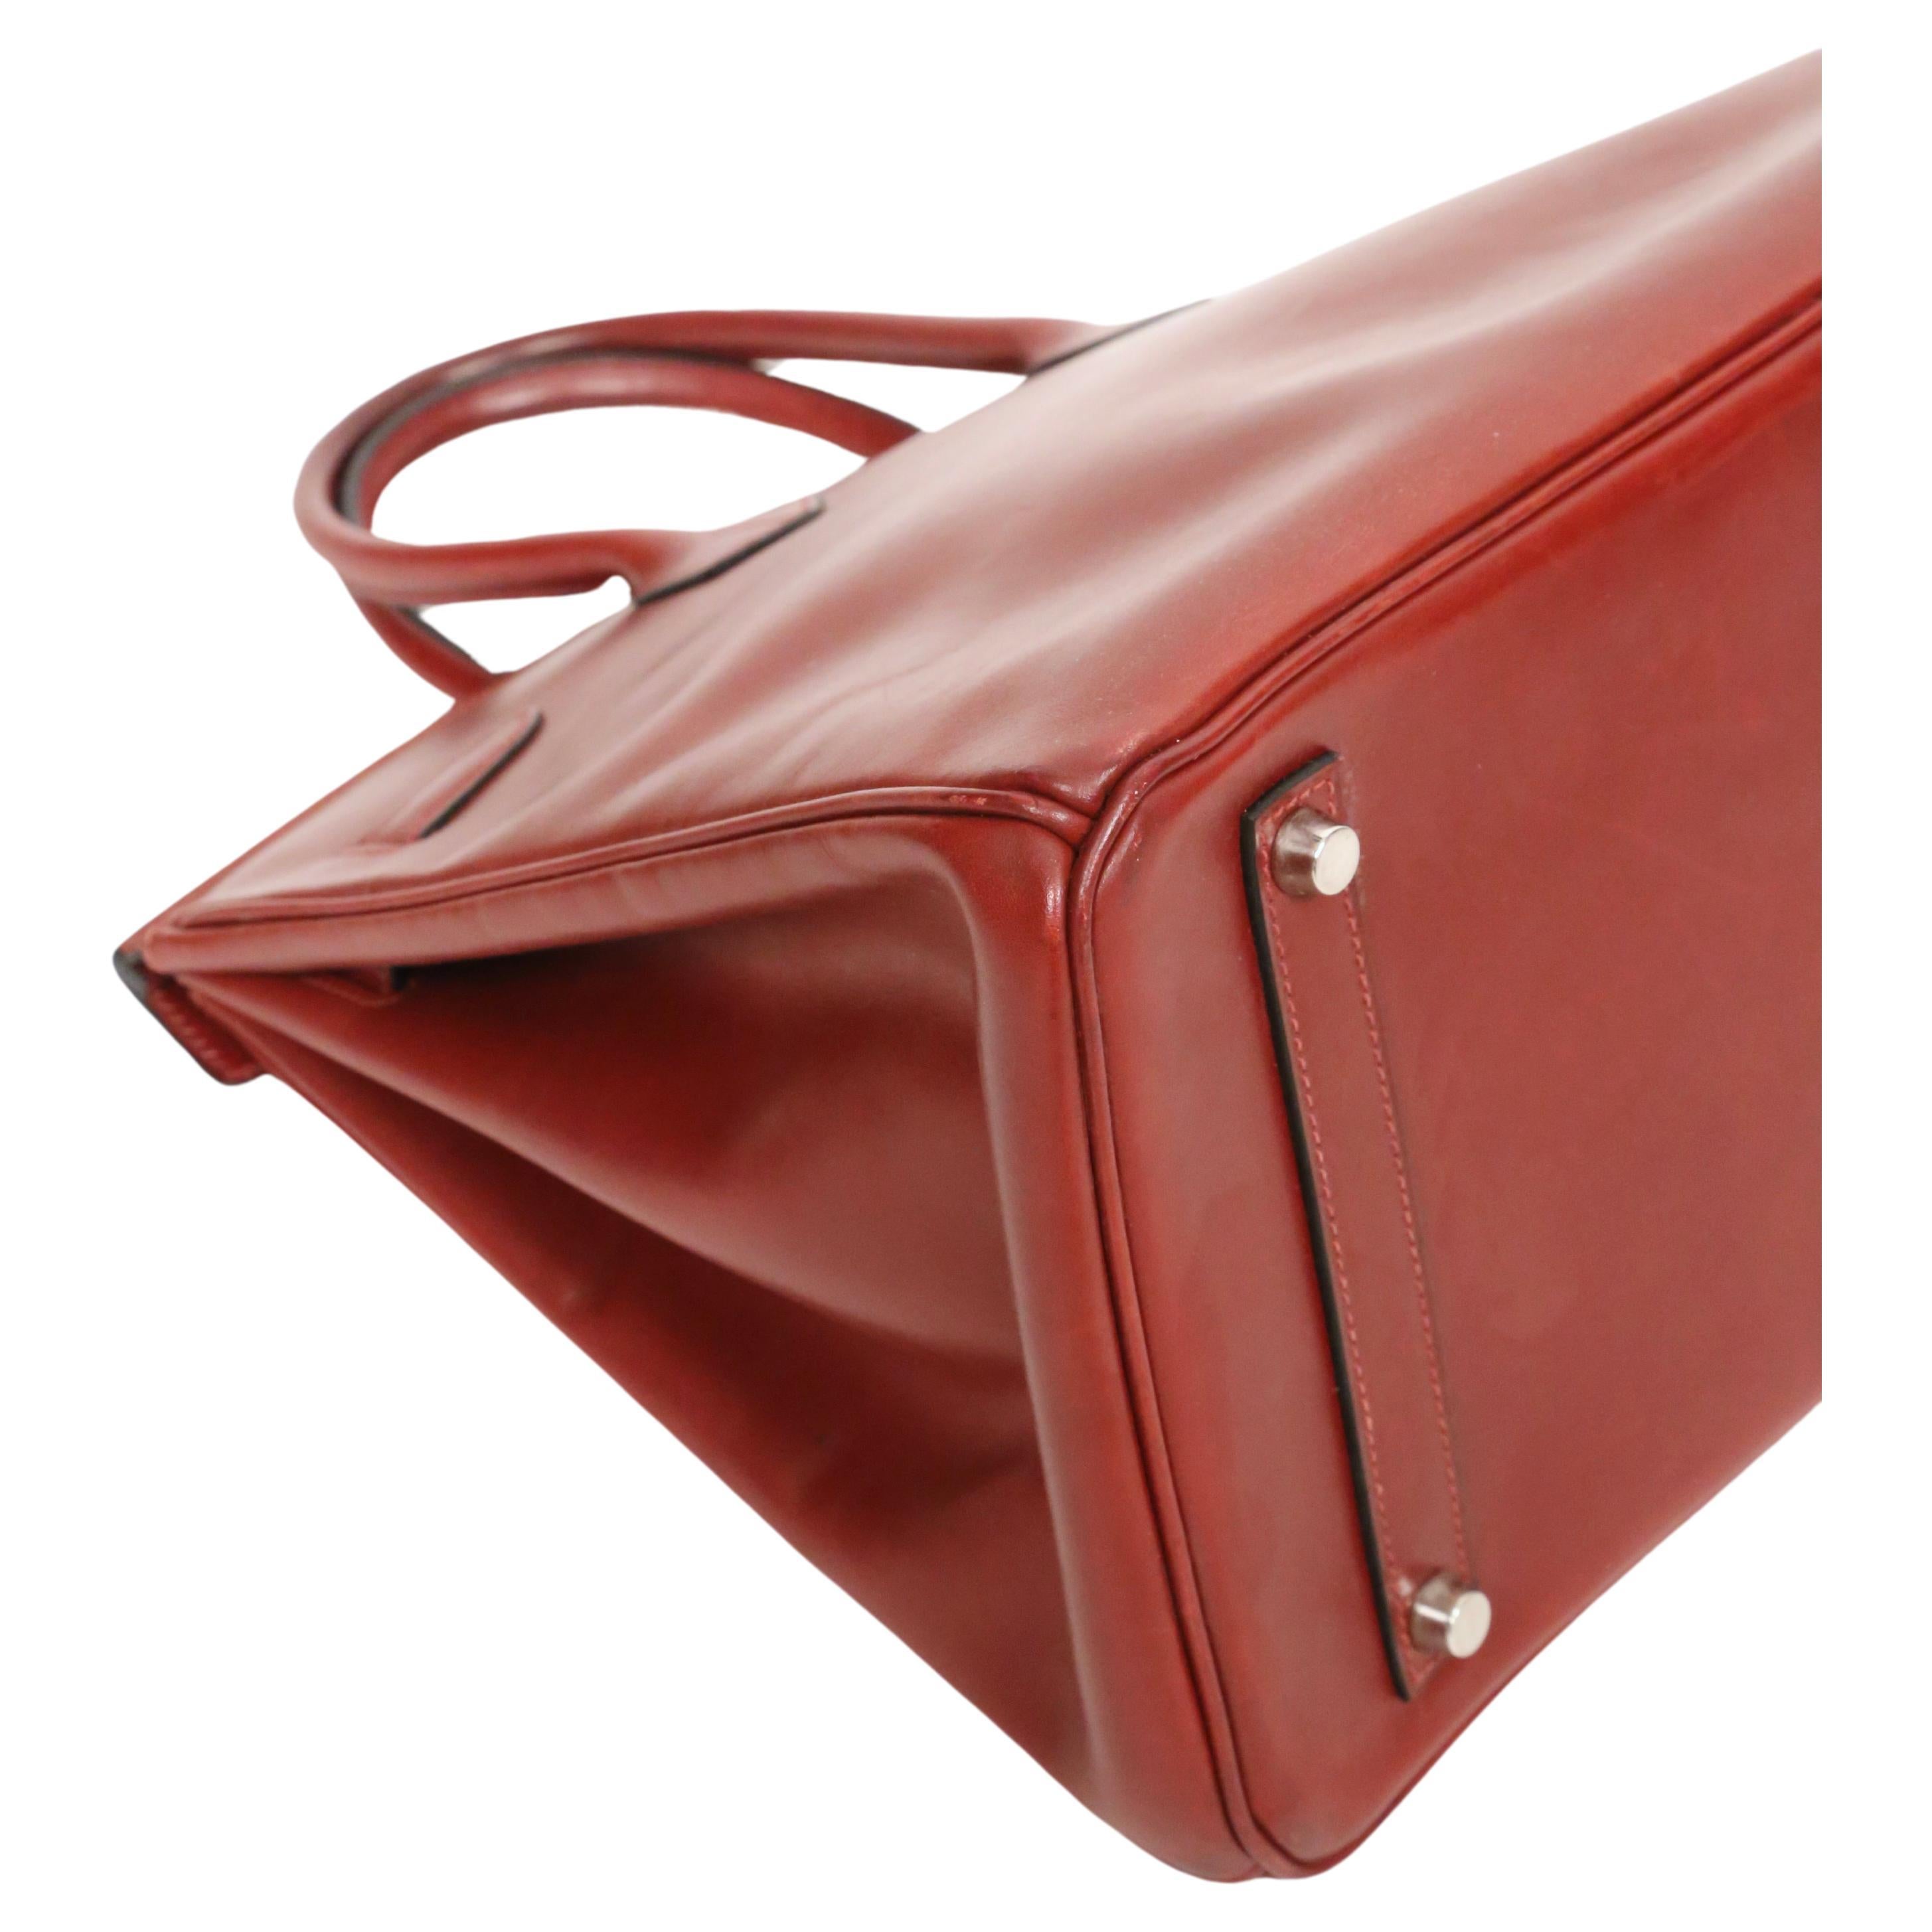 2005 HERMES 35 cm rouge box leather BIRKIN bag 5